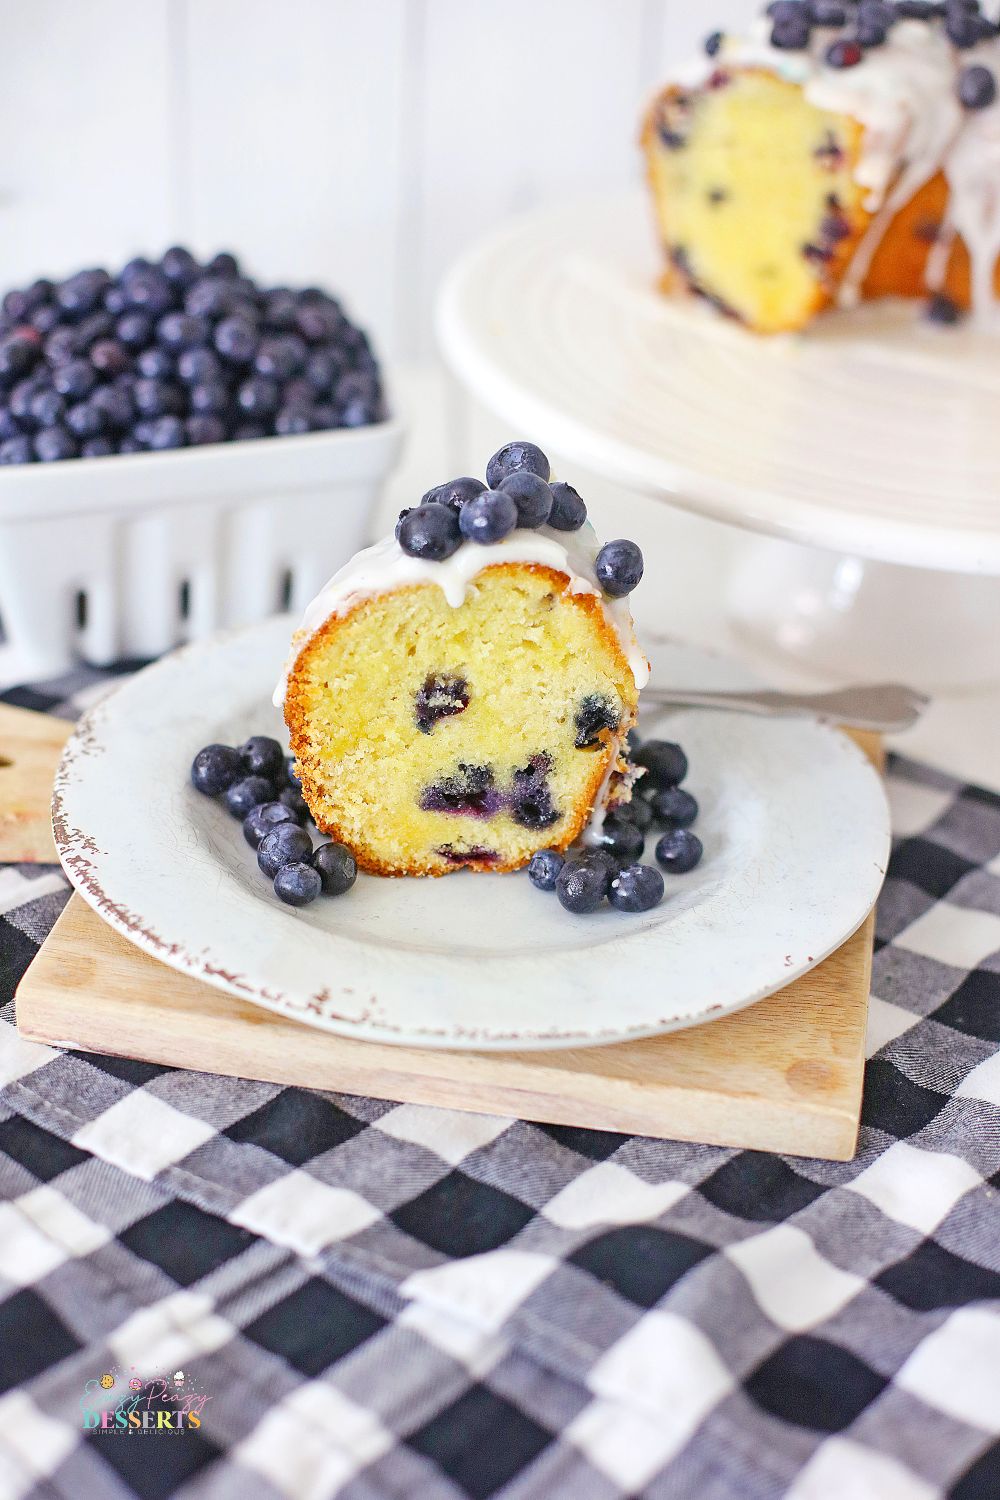 Image of a slice of blueberry Bundt cake with vanilla glaze